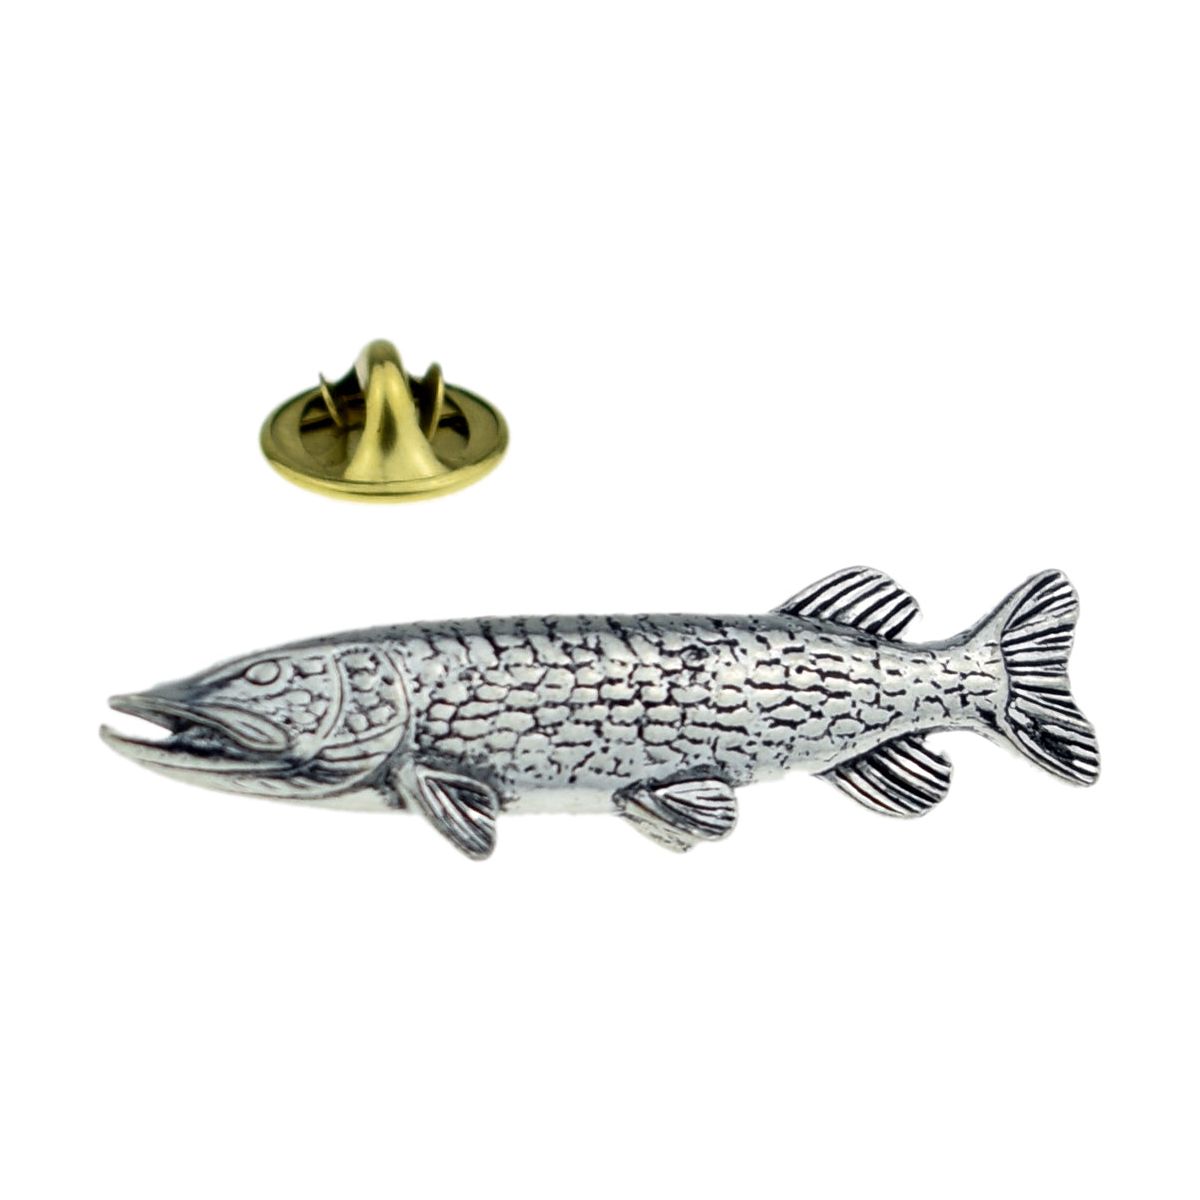 Pike Fish Pewter Lapel Pin Badge - Ashton and Finch